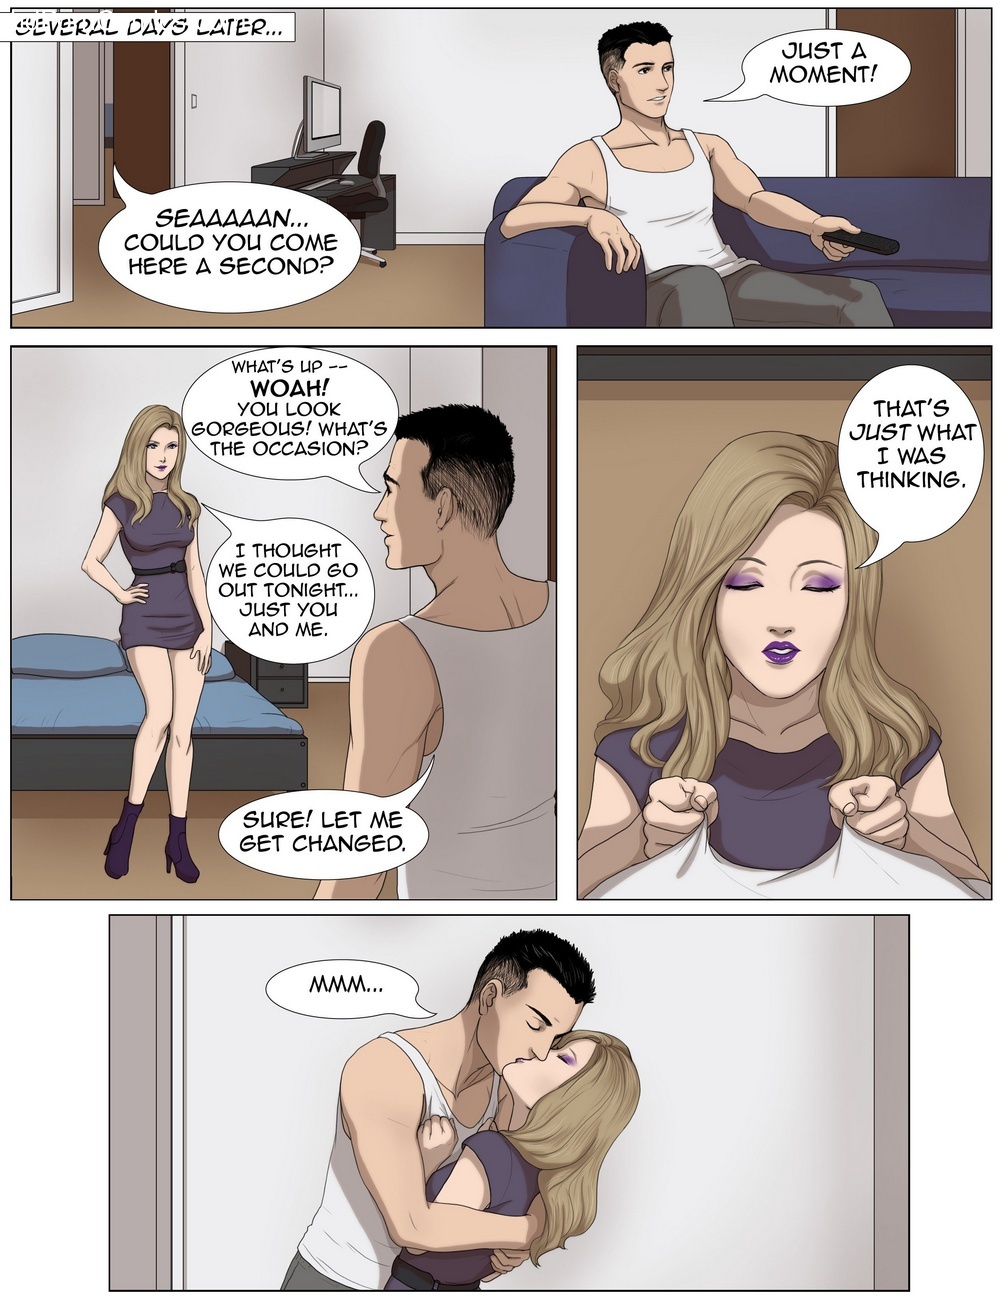 Bisexual Sex Cartoons - Bi-Curious Sex Comic - HD Porn Comics